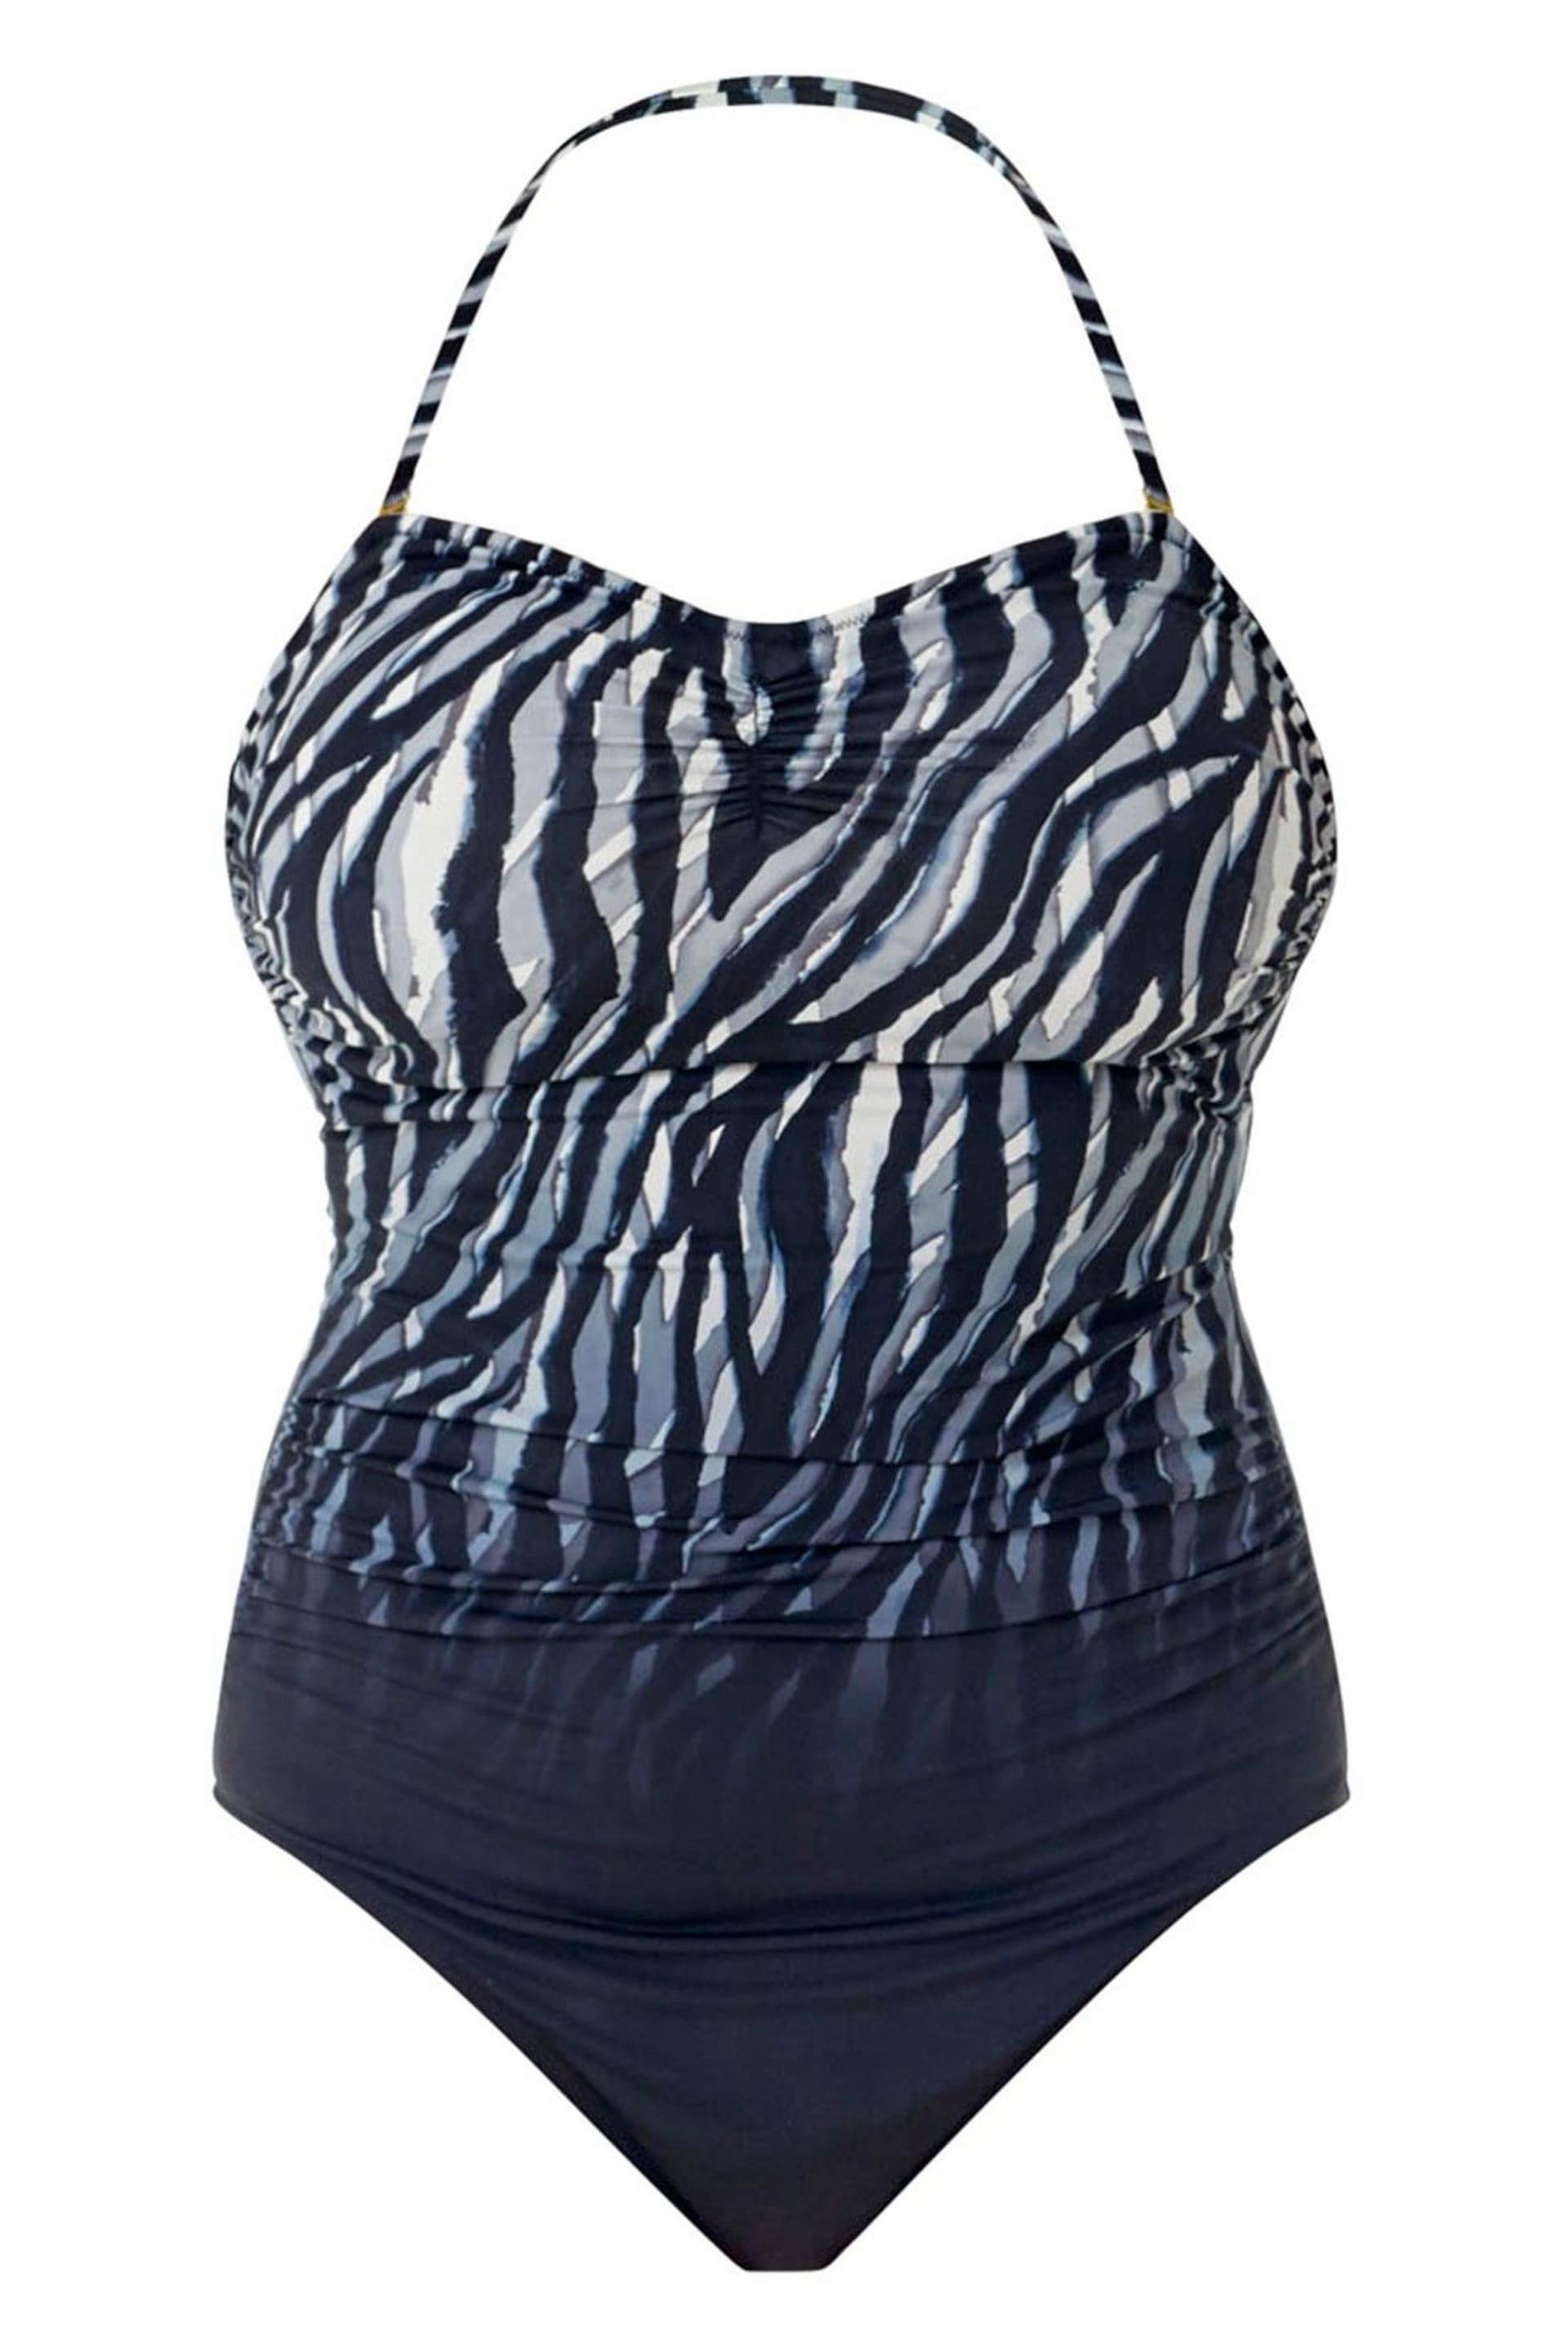 Seaspray Black Savanna Zebra Bandeau Tummy Control Swimsuit - Image 6 of 6